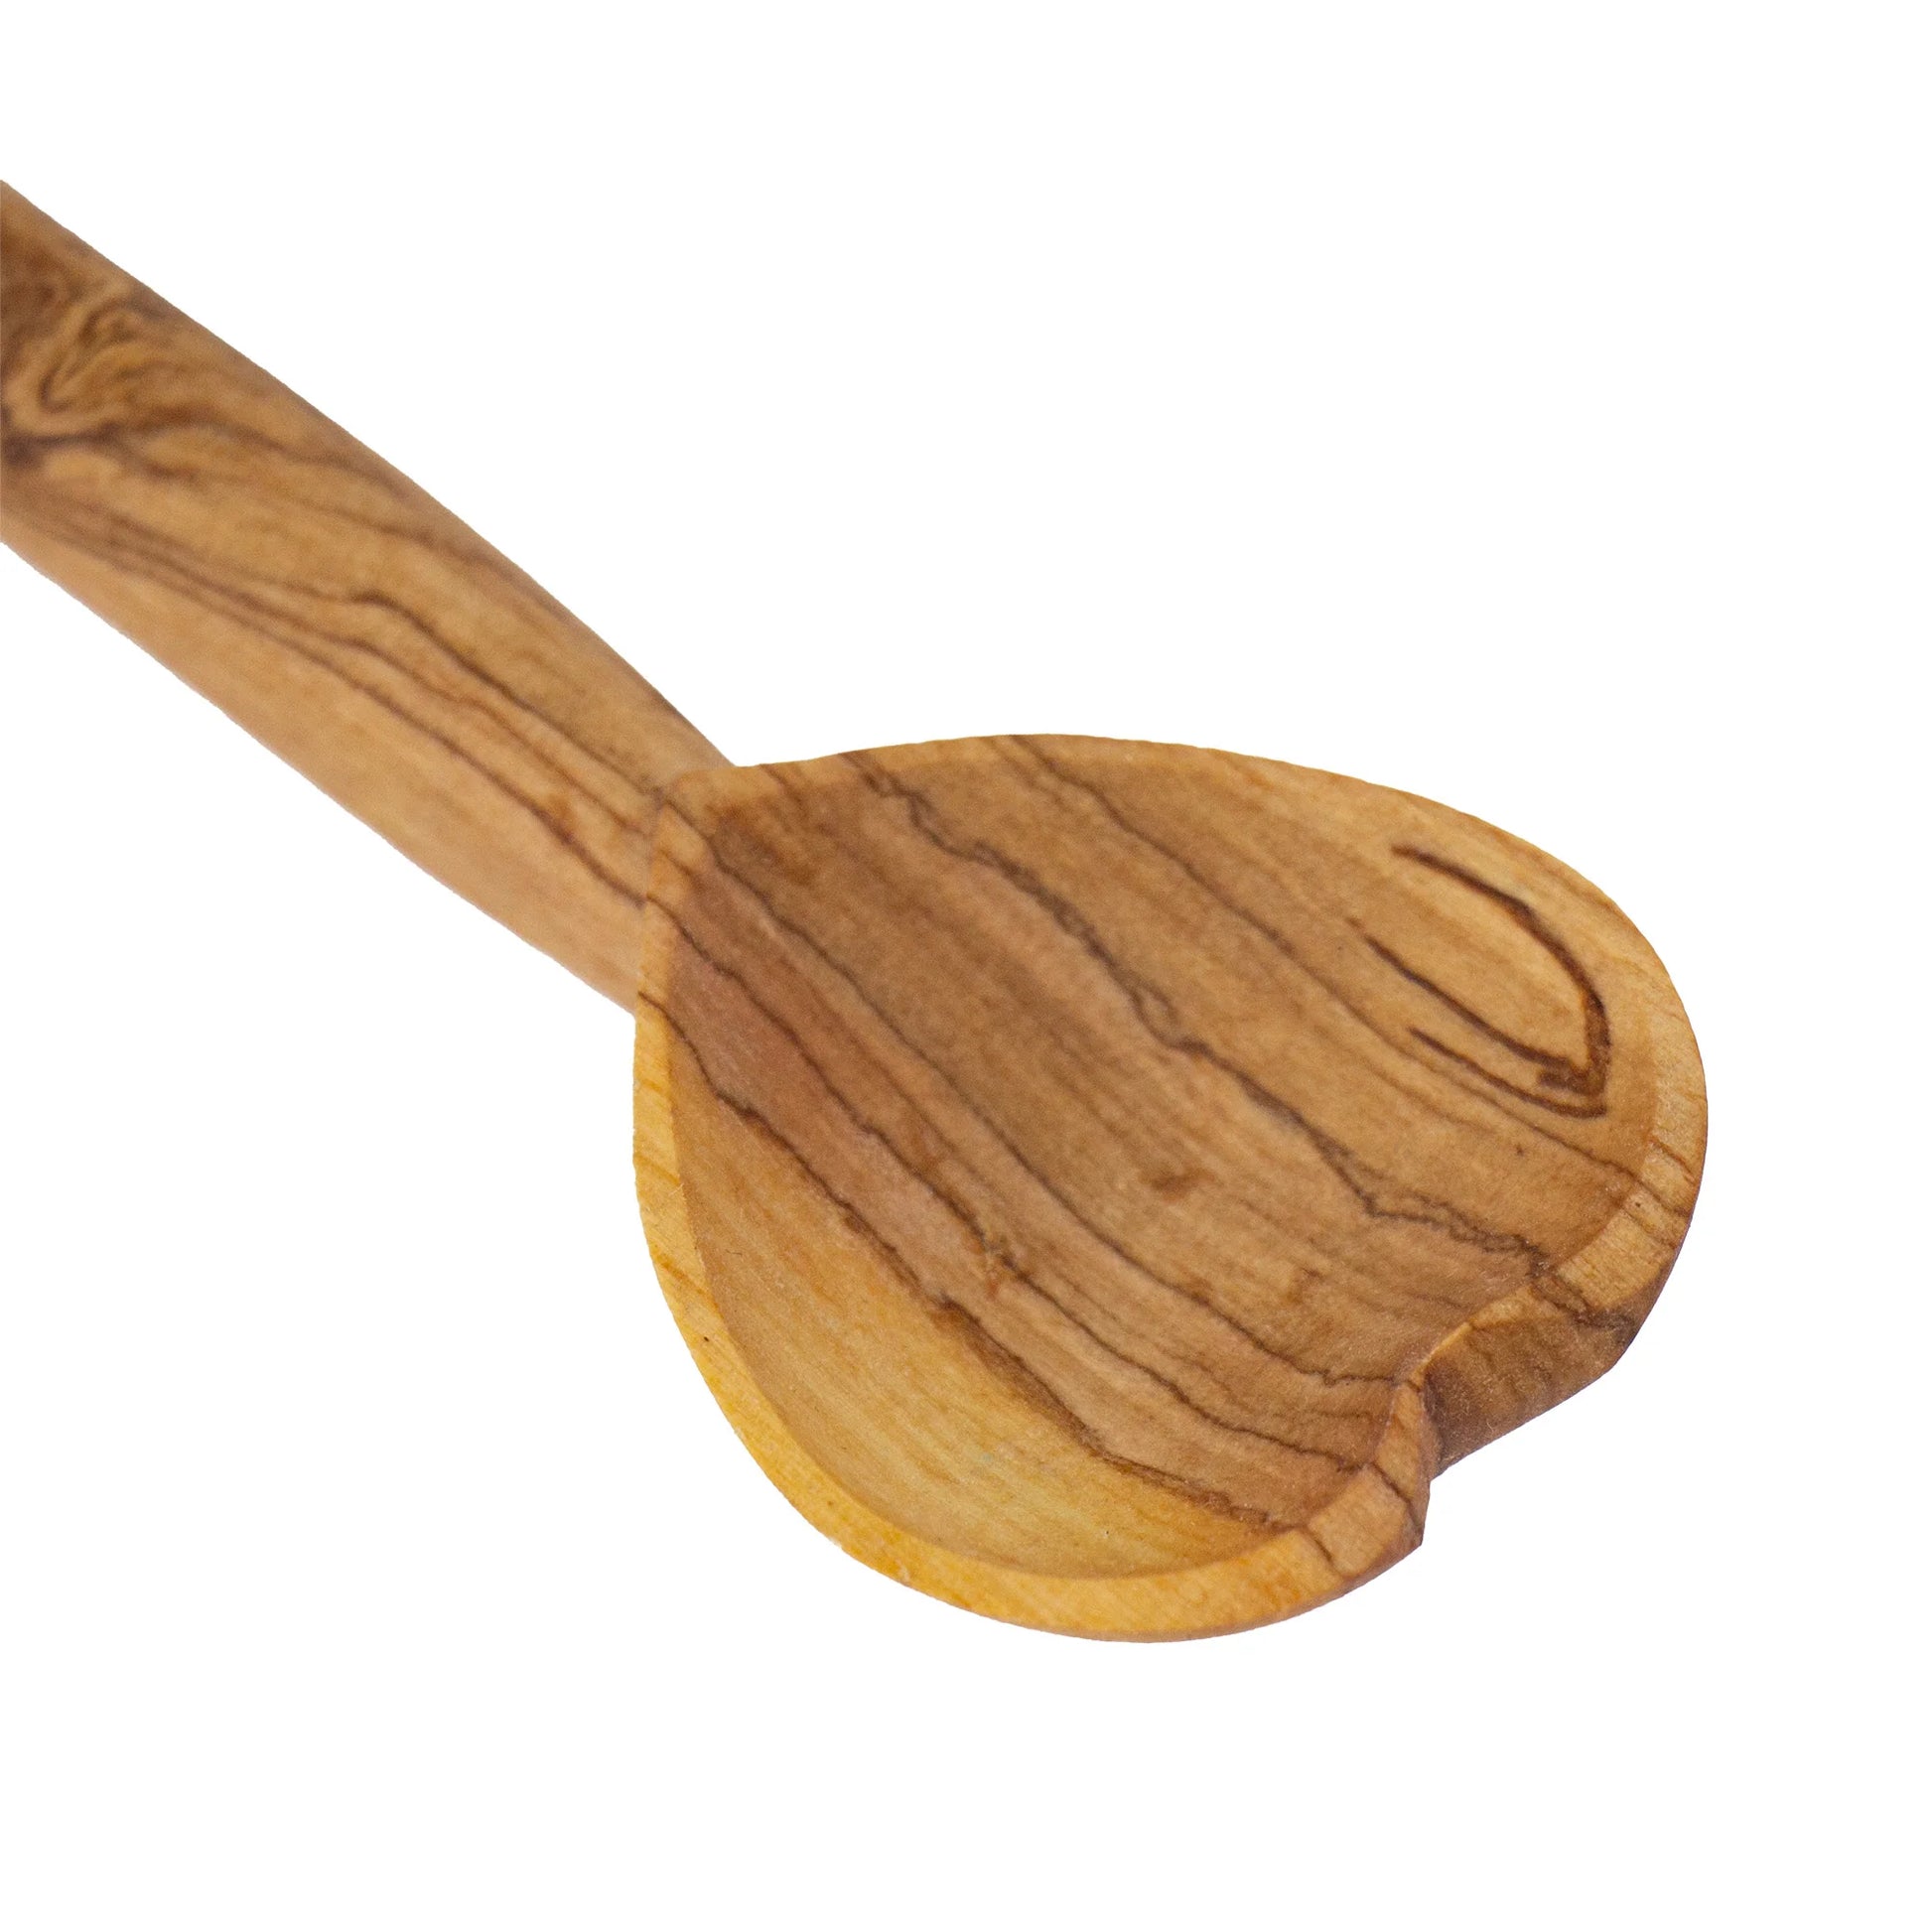 Olive Wood Heart Scoop Spoon, 6-7 INCH